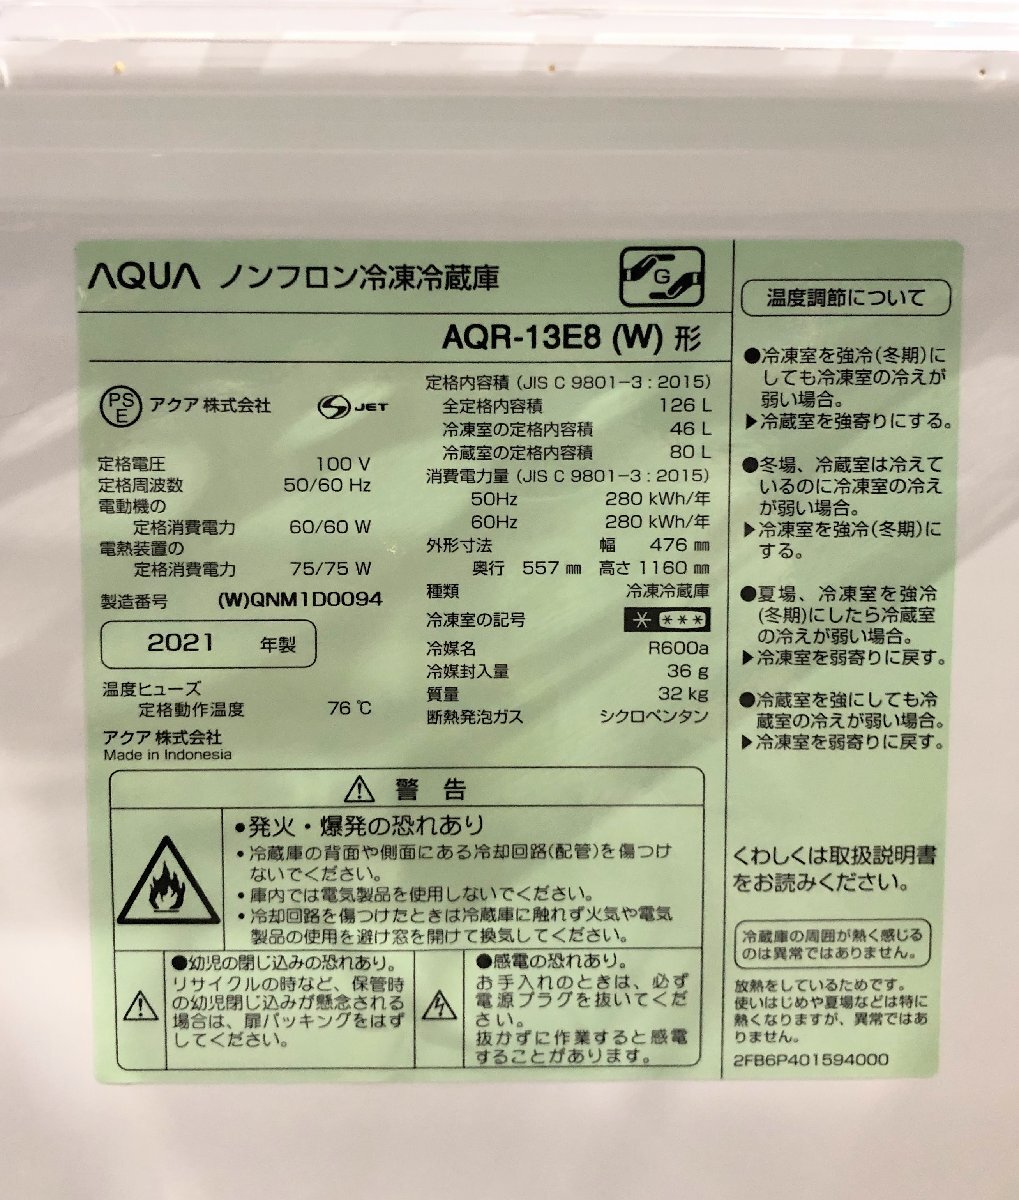 #AQUA/ aqua # 2 двери рефрижератор рефрижератор AQR-13E8 белый 2021 год производства 126L* Saitama отправка *